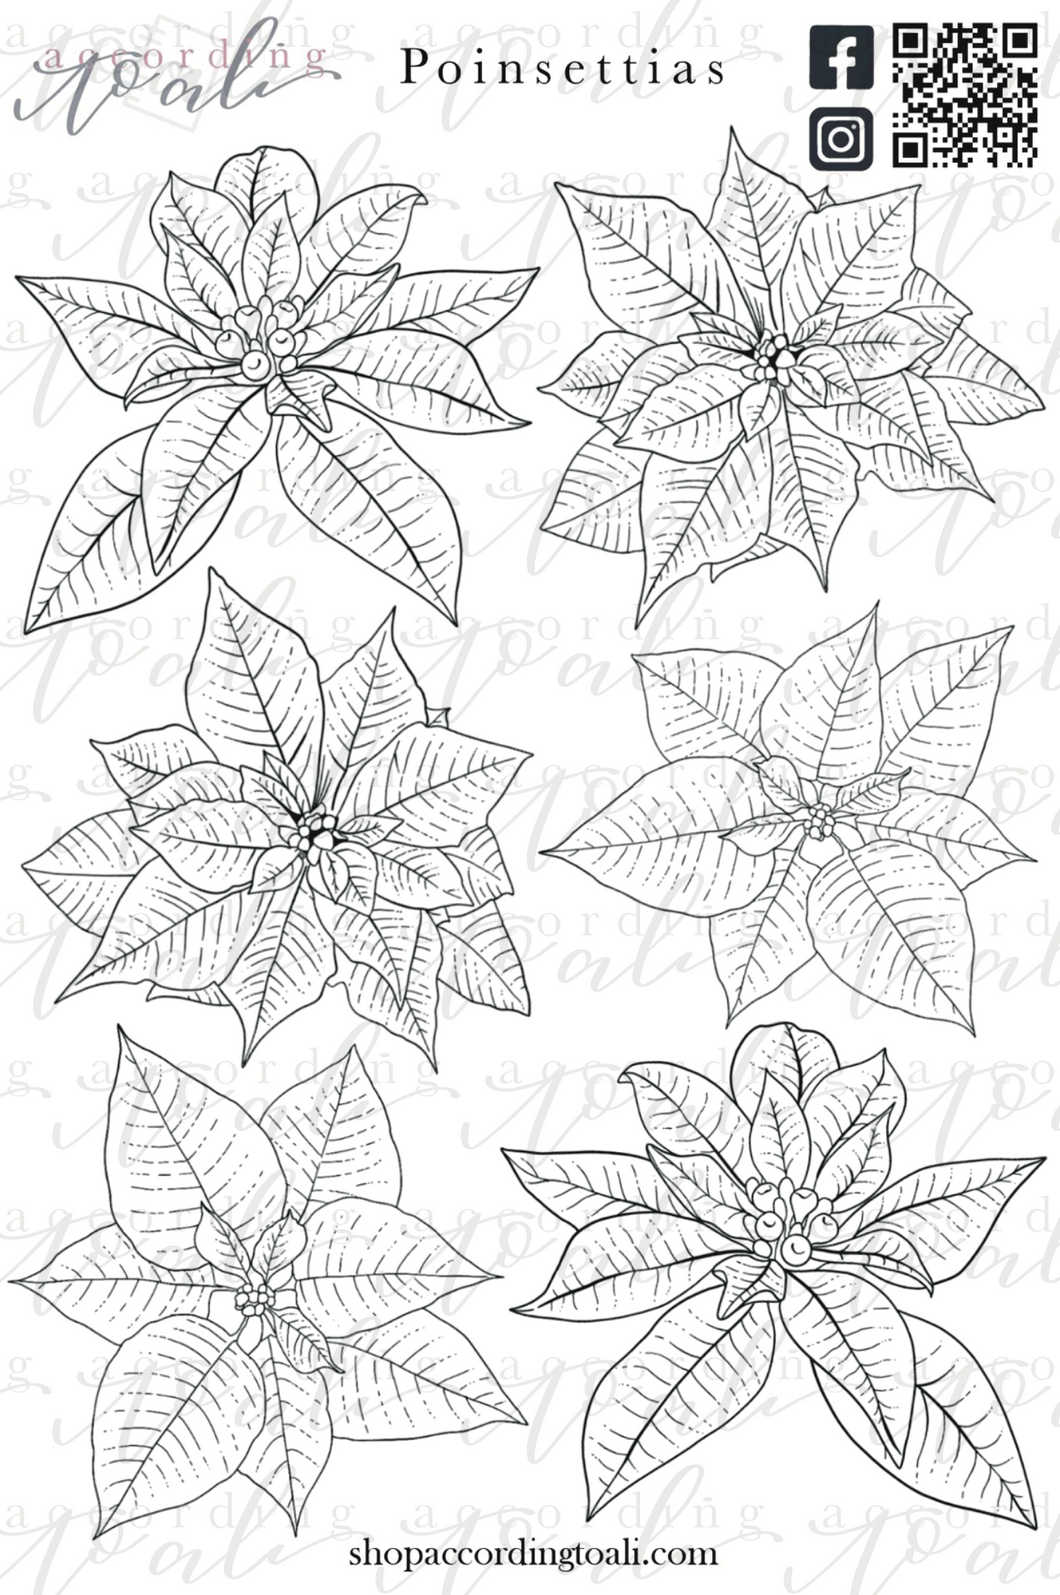 Poinsettias Sticker Sheet